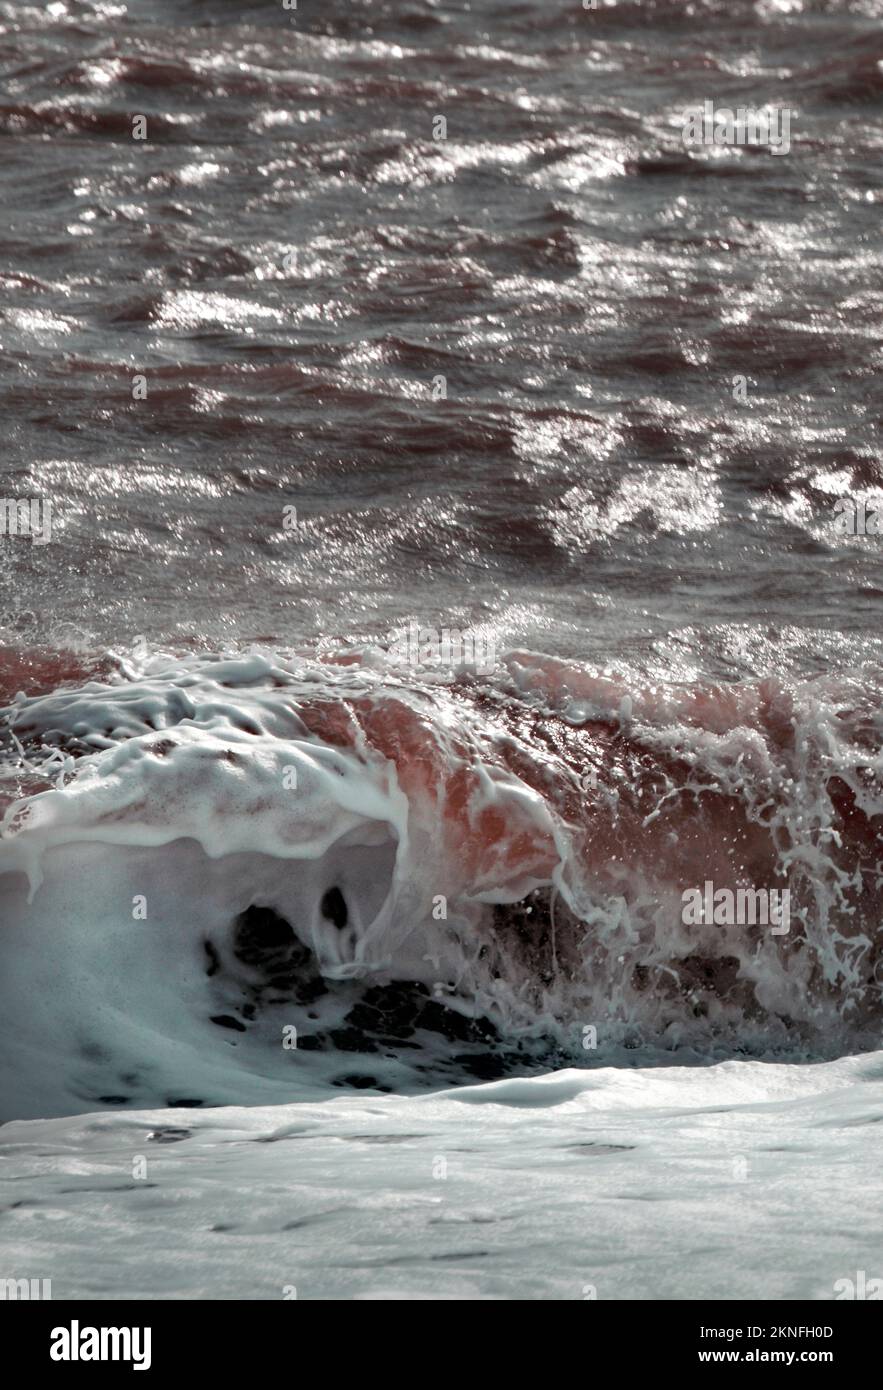 Roter Zauber, brechende Wellen, dunwich suffolk england Stockfoto